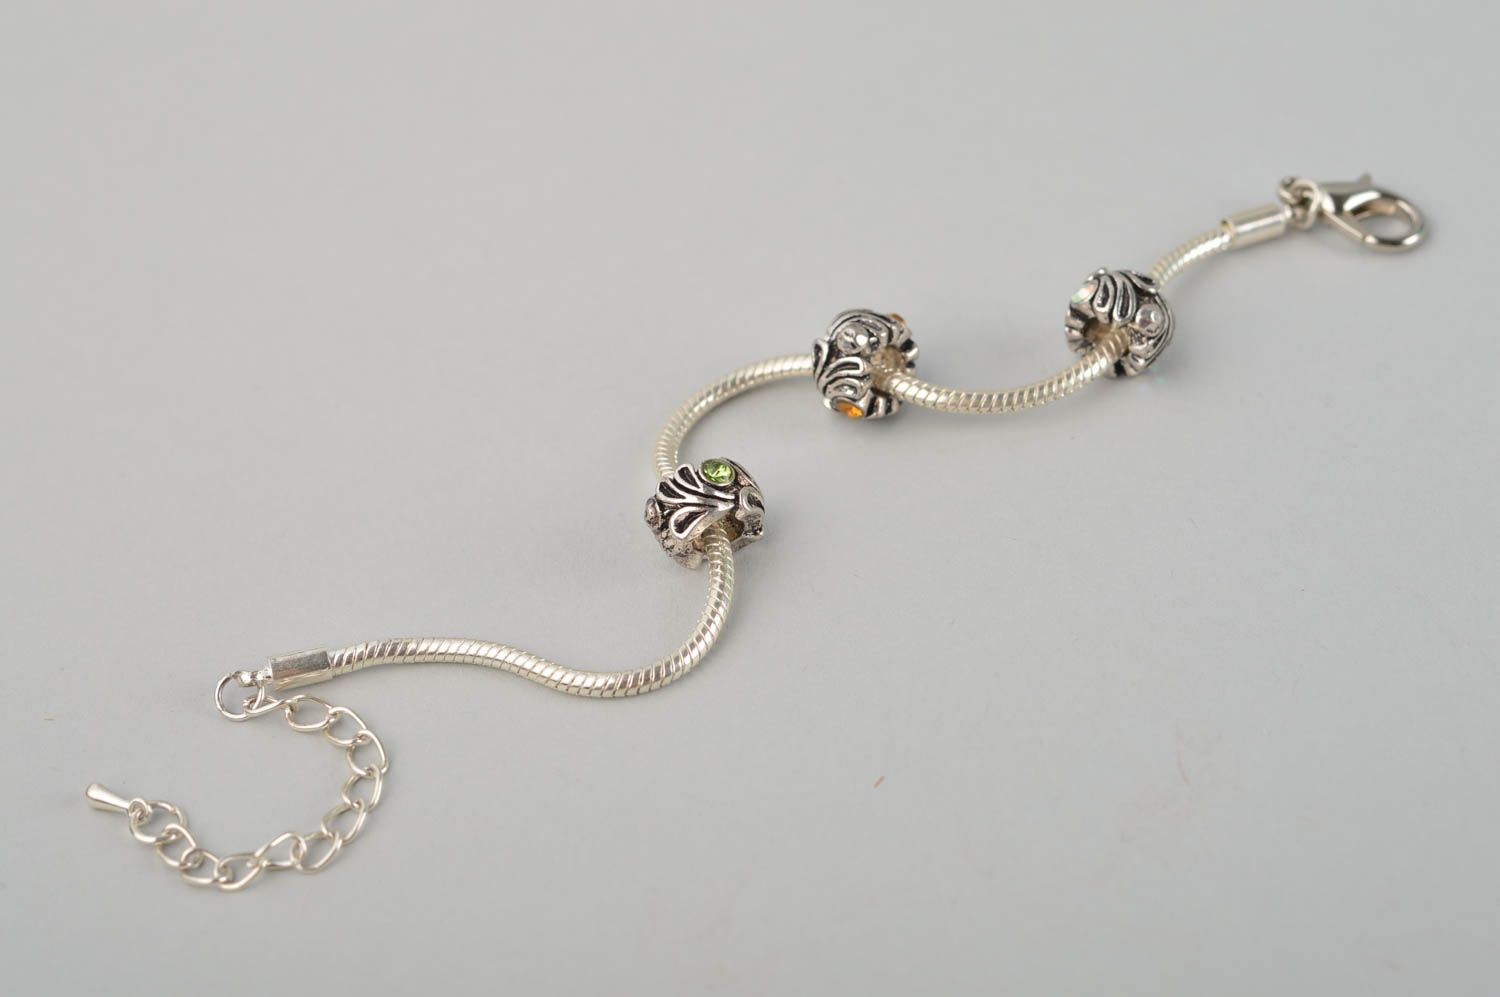 Metal stylish bracelet unusual handmade bracelet wrist accessory gift for her photo 4